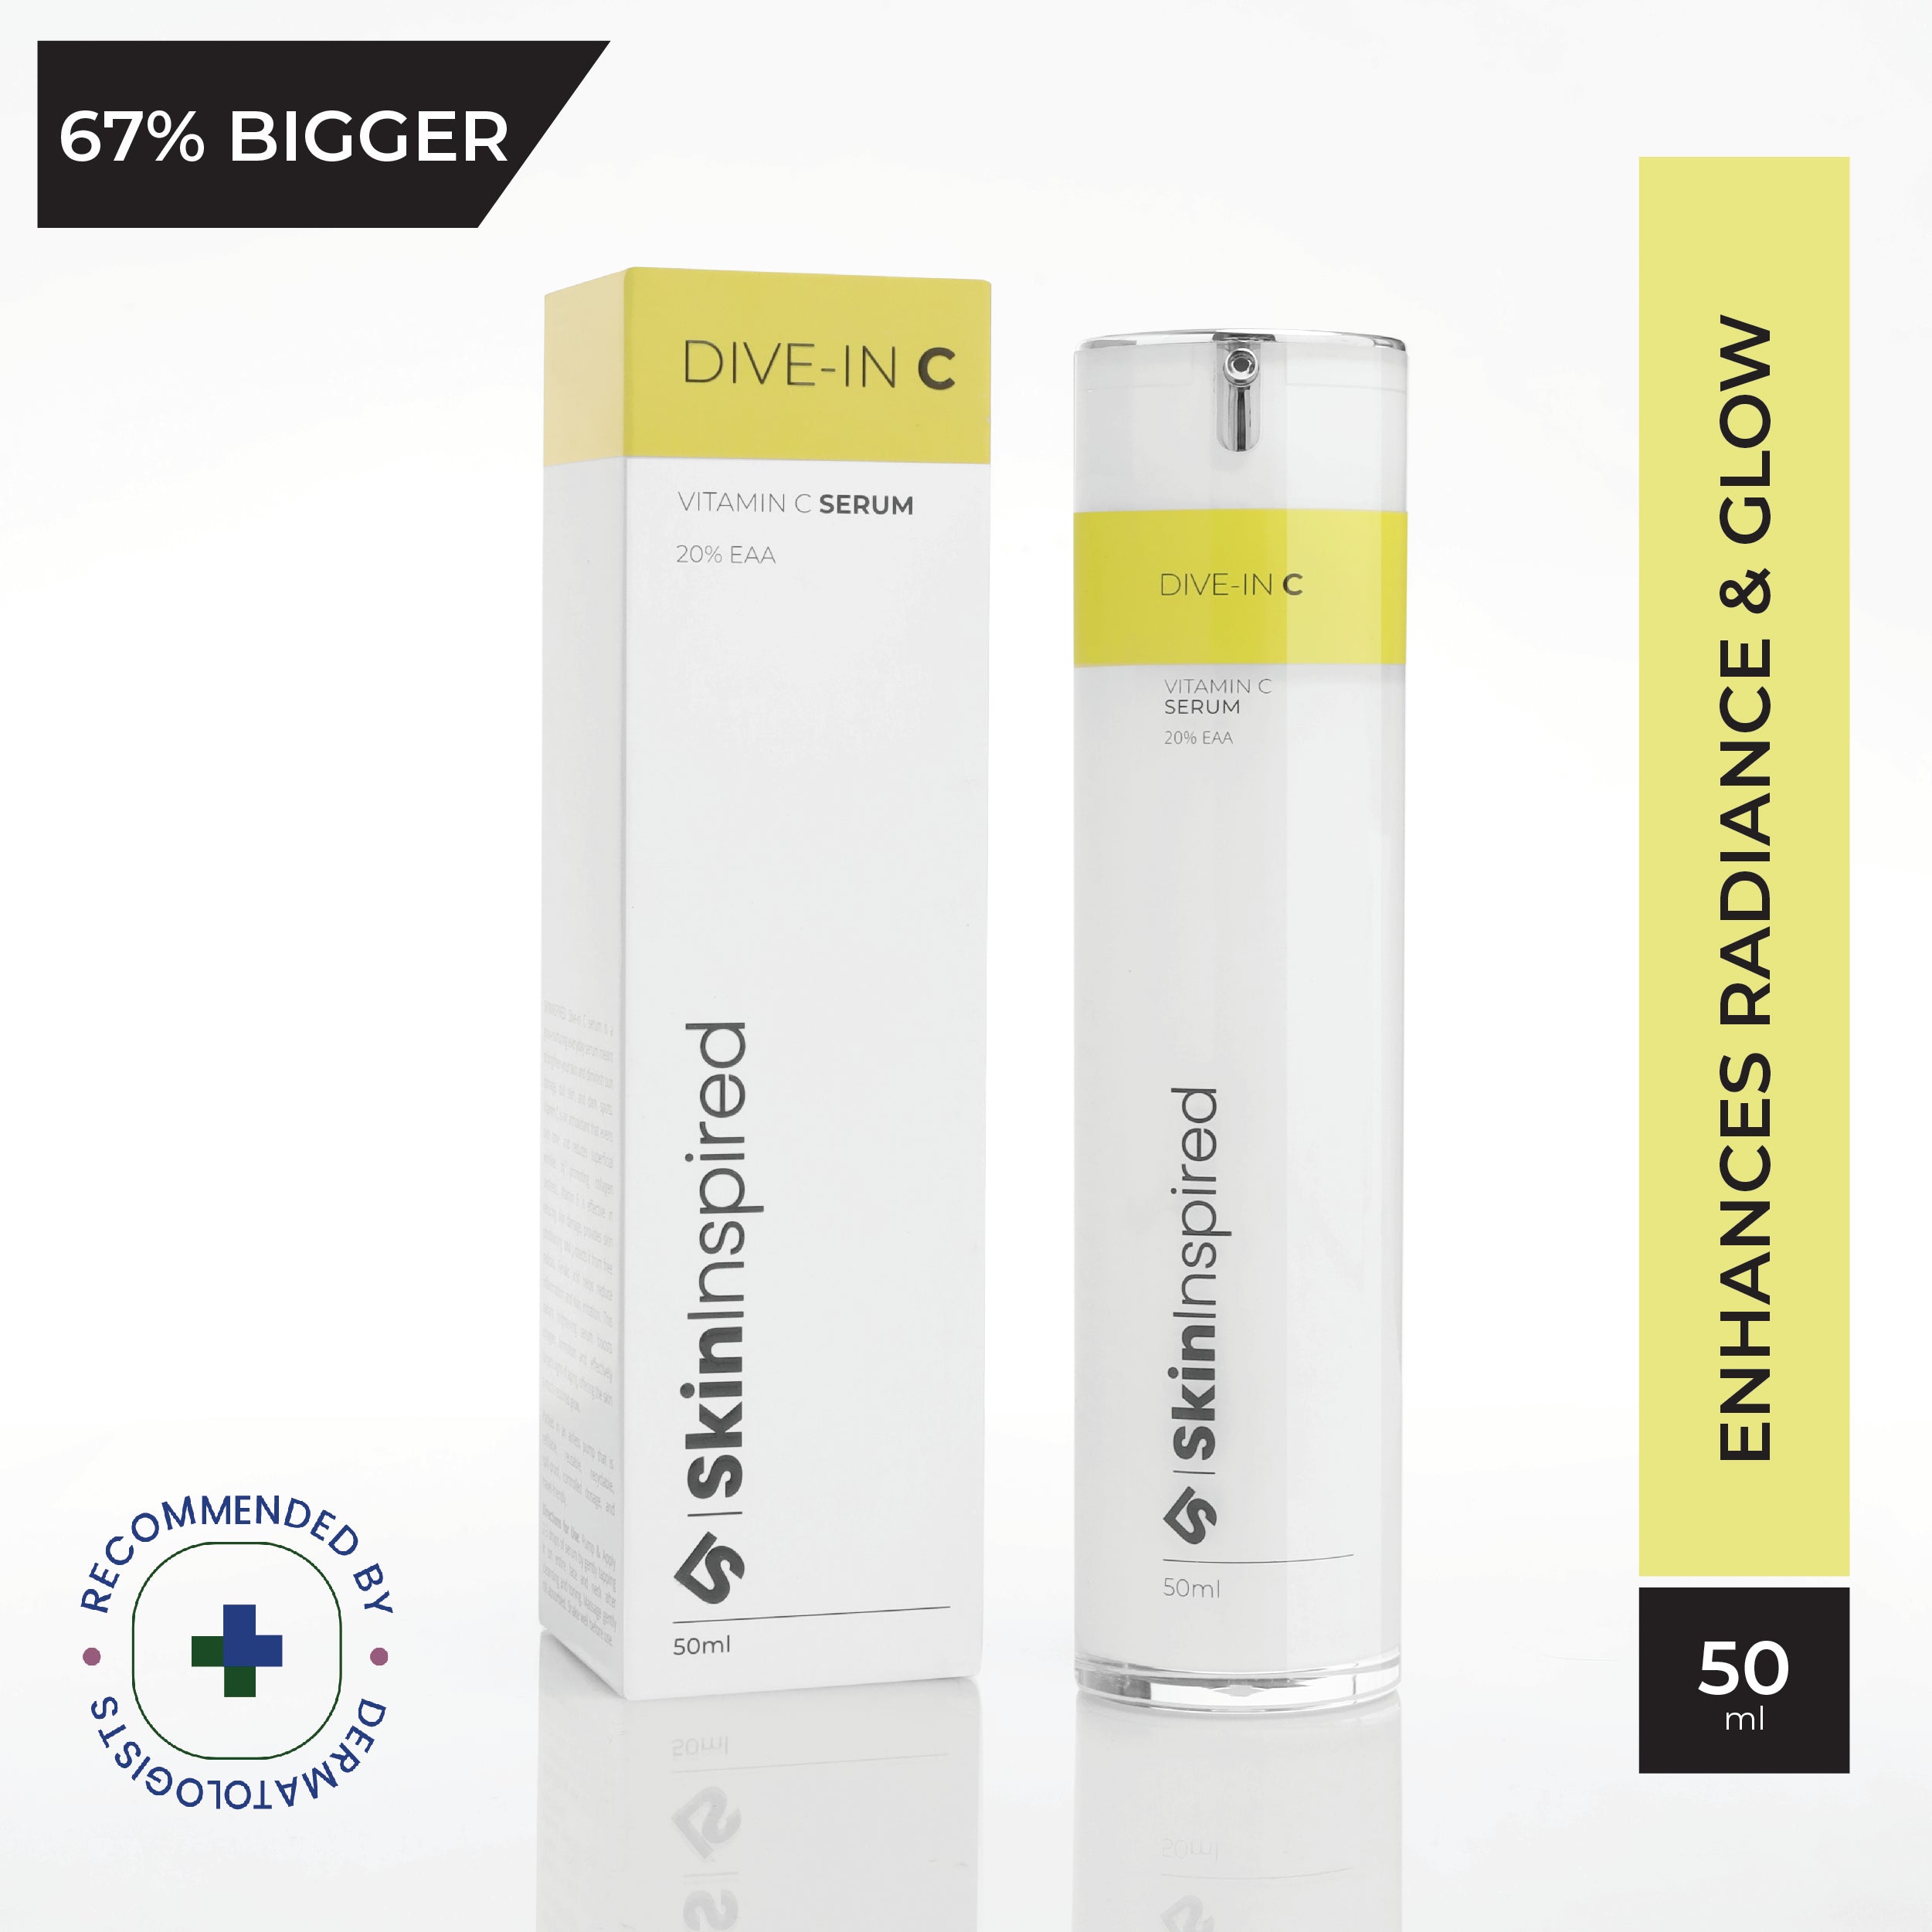 SkinInspired Dive-in-C 20% Vitamin C (EAA) 50ml Serum for Skin Brightening, Radiance & Glow